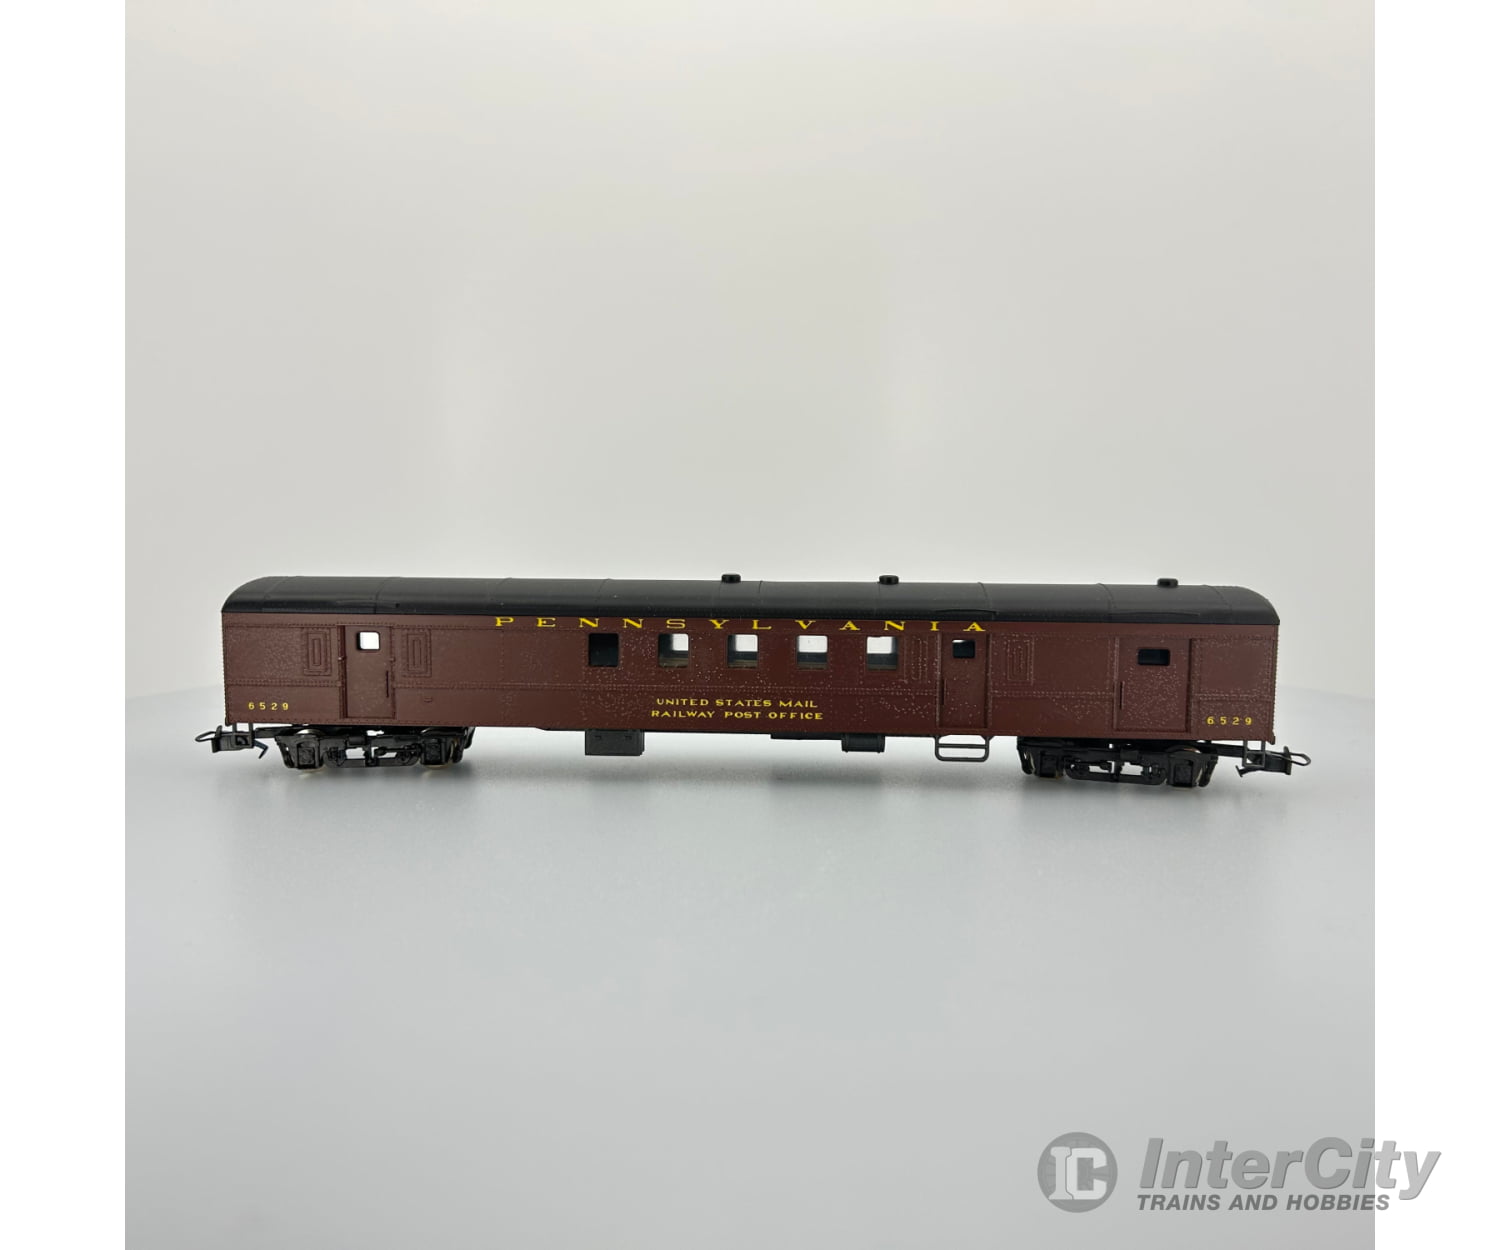 Rivarossi 2742 Streamlined Post Office Car #6529 Of The Pennsylvania Railroad Passenger Cars